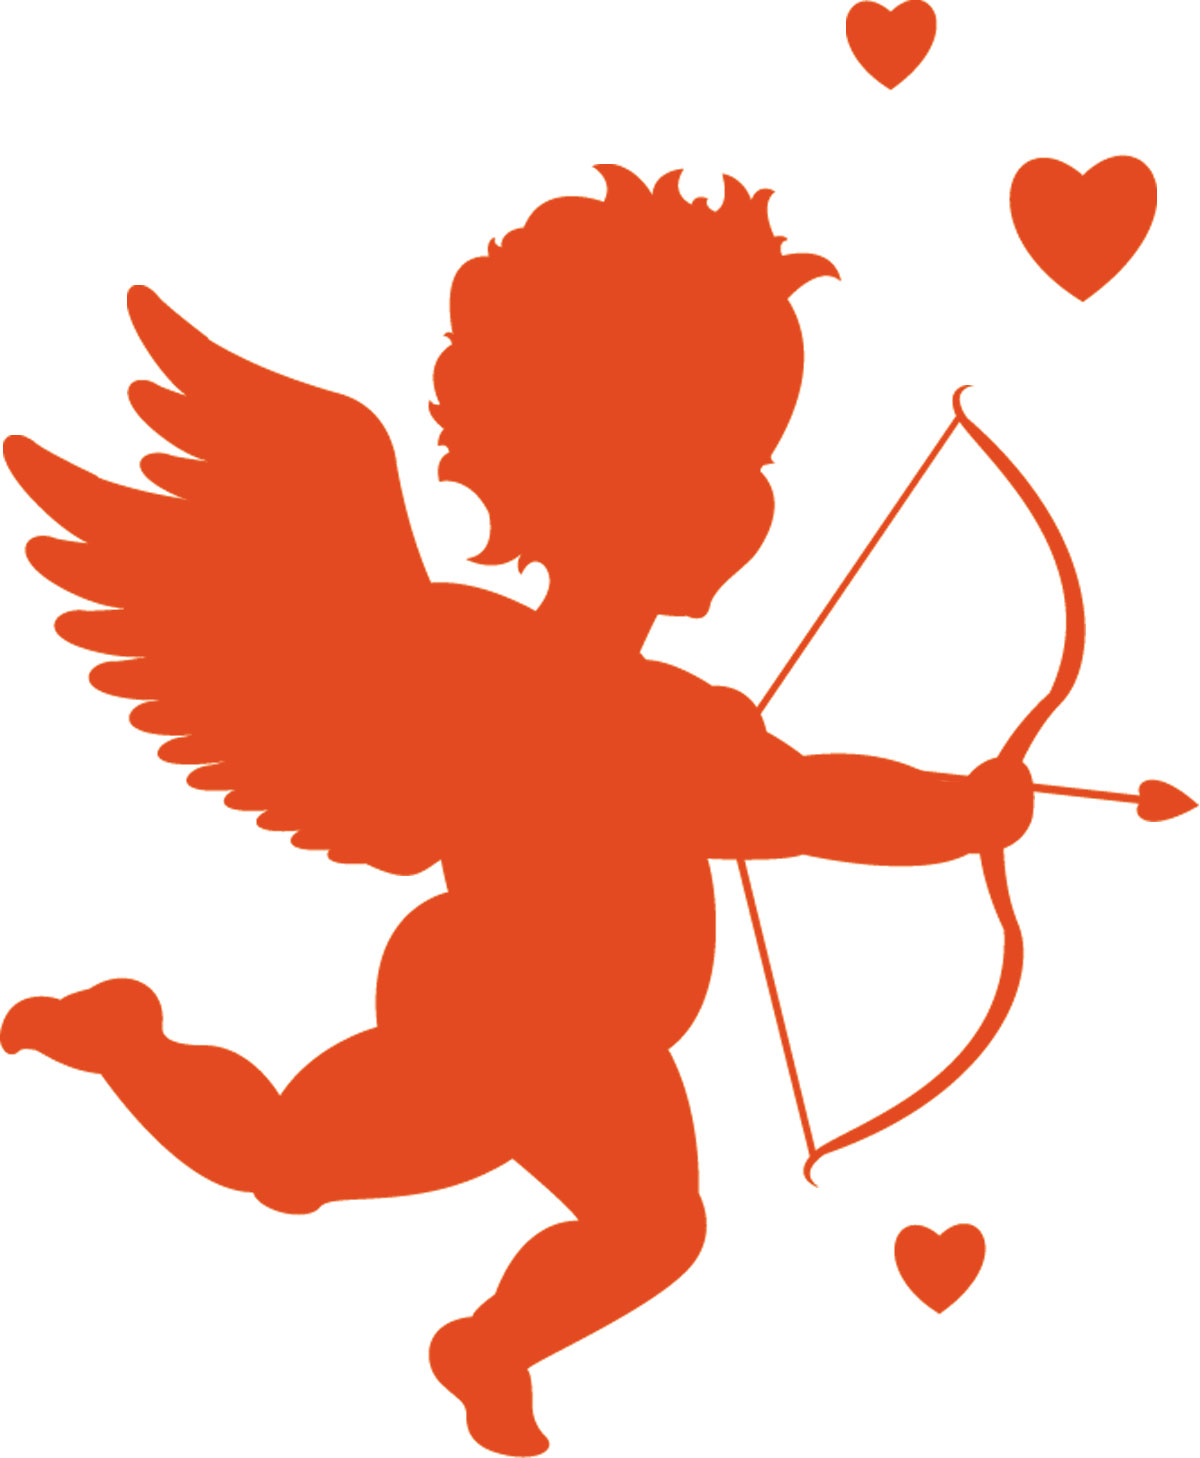 Competing With Cupid | Swarajya